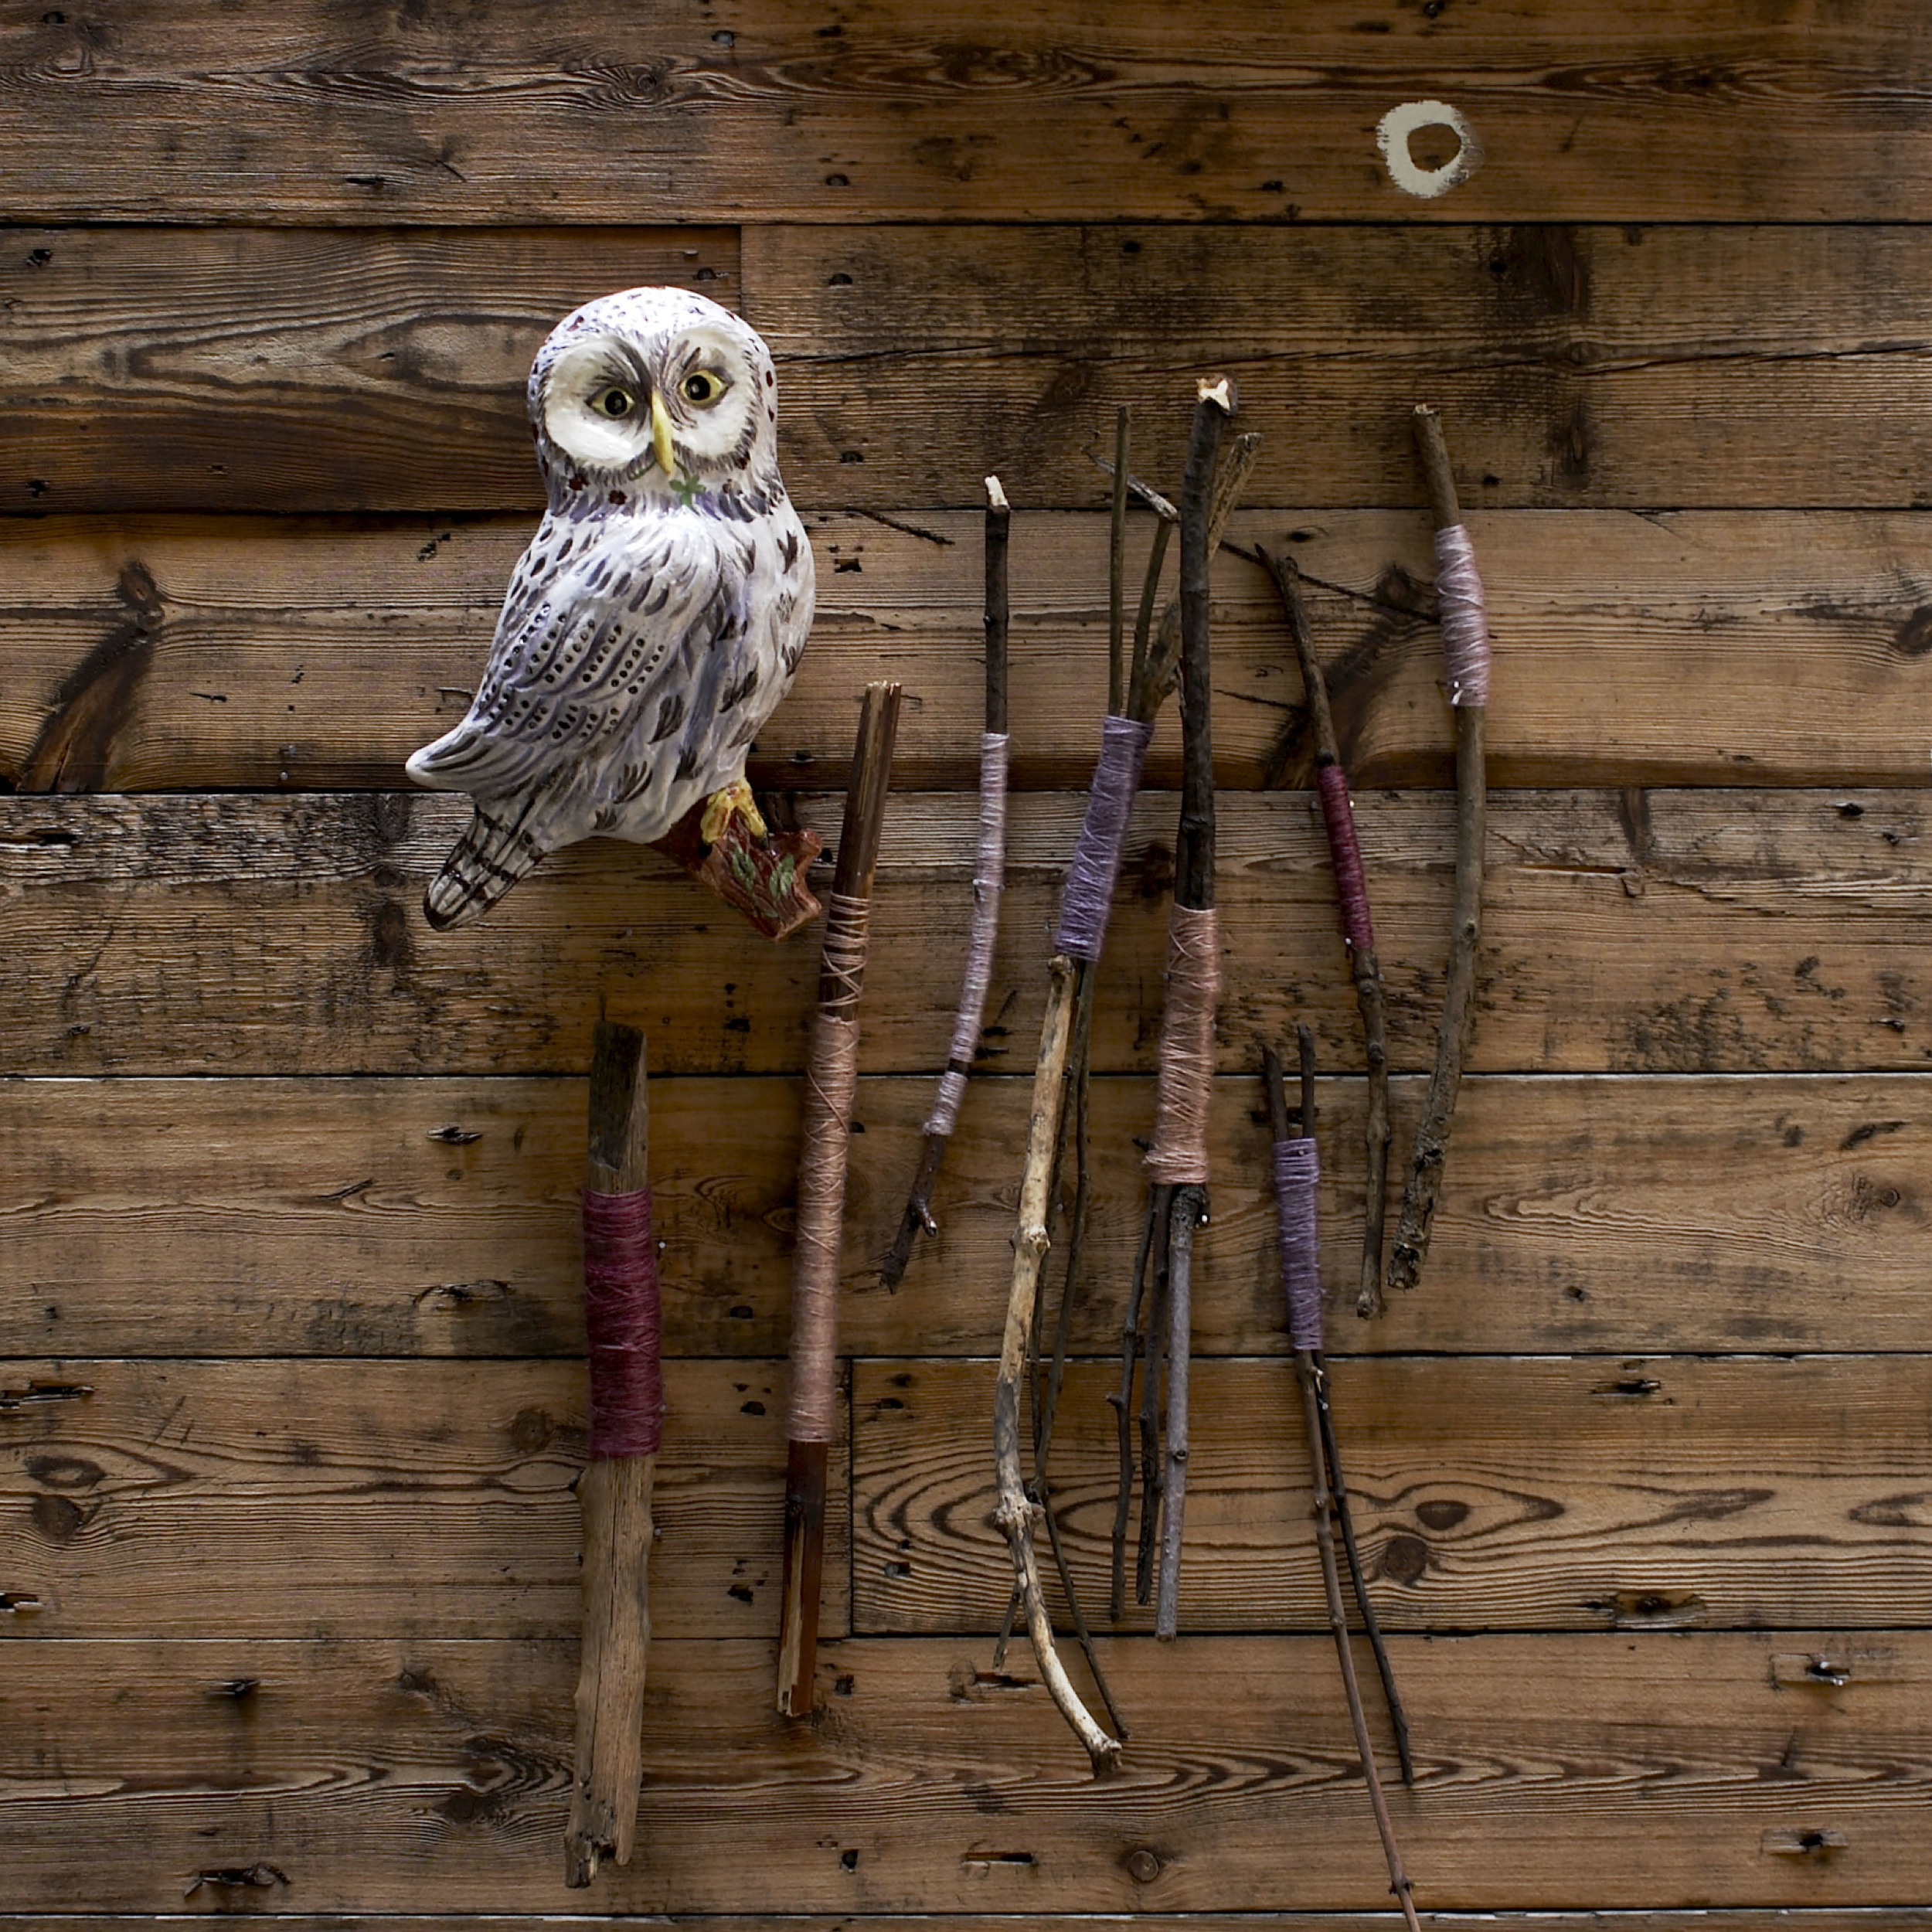 Loop,London owl still life with yarn and ceramics.jpg